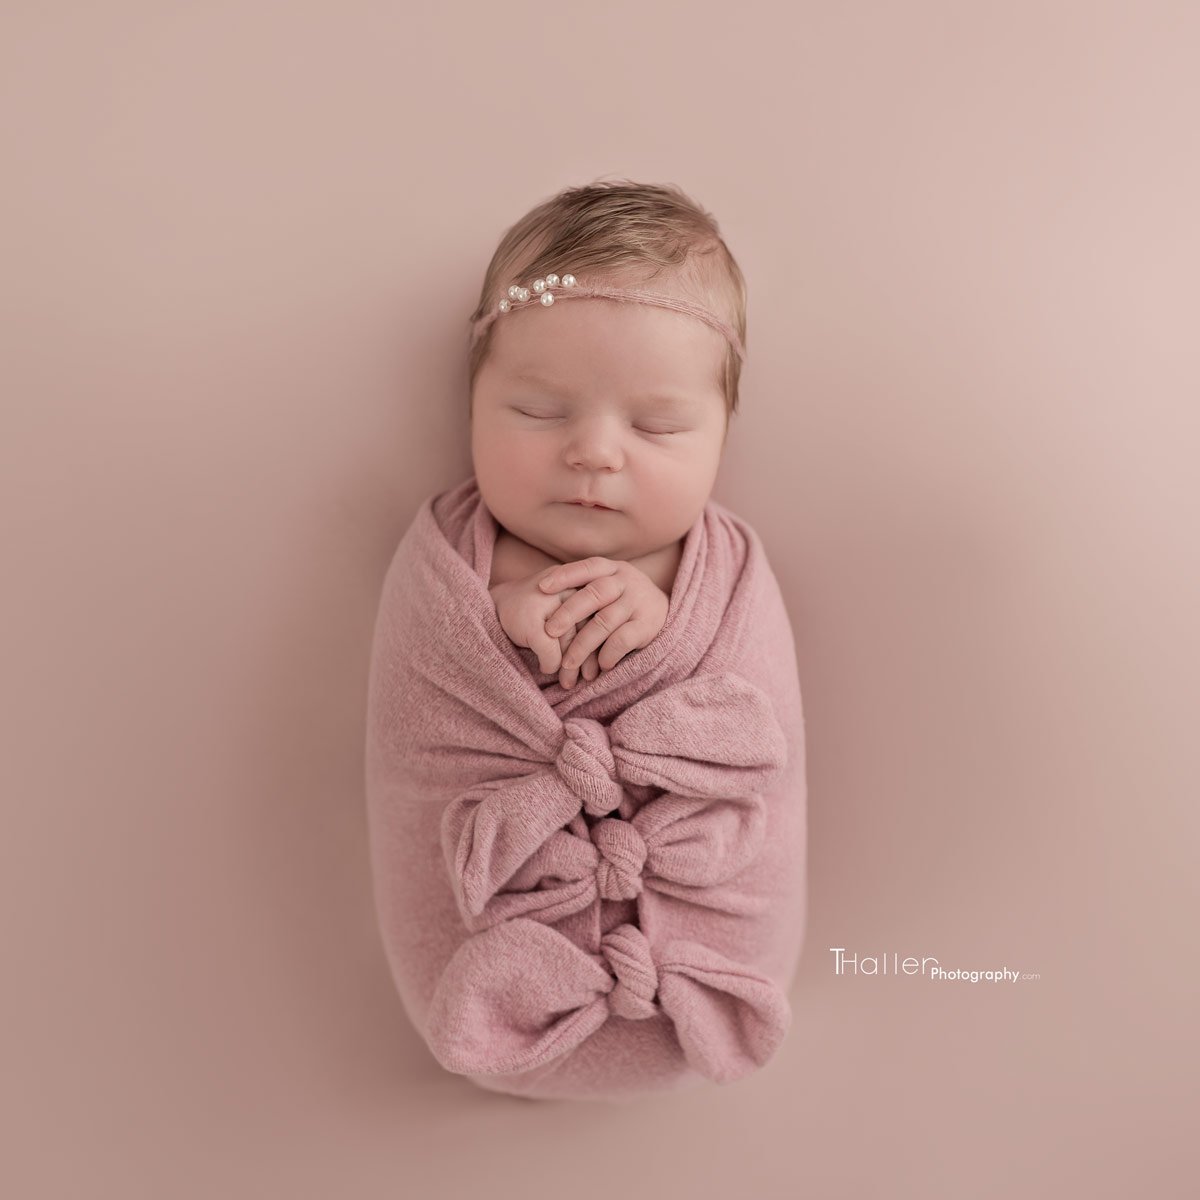 Newborn girl sleeping wrapped in a pink blanket wearing a flower headband